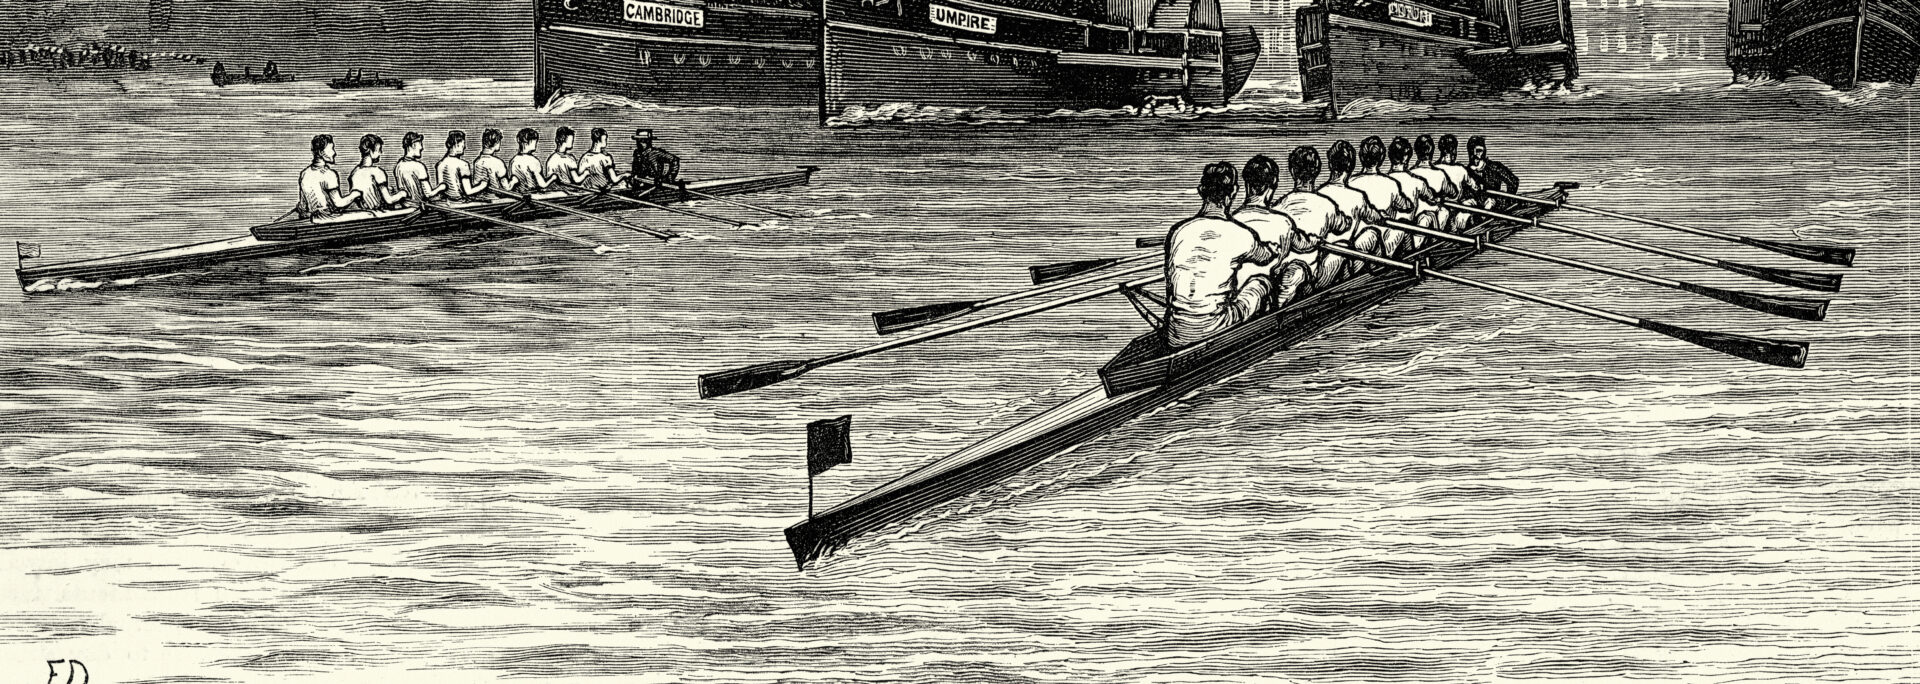 The Boat Race - a brief history | Cambridge